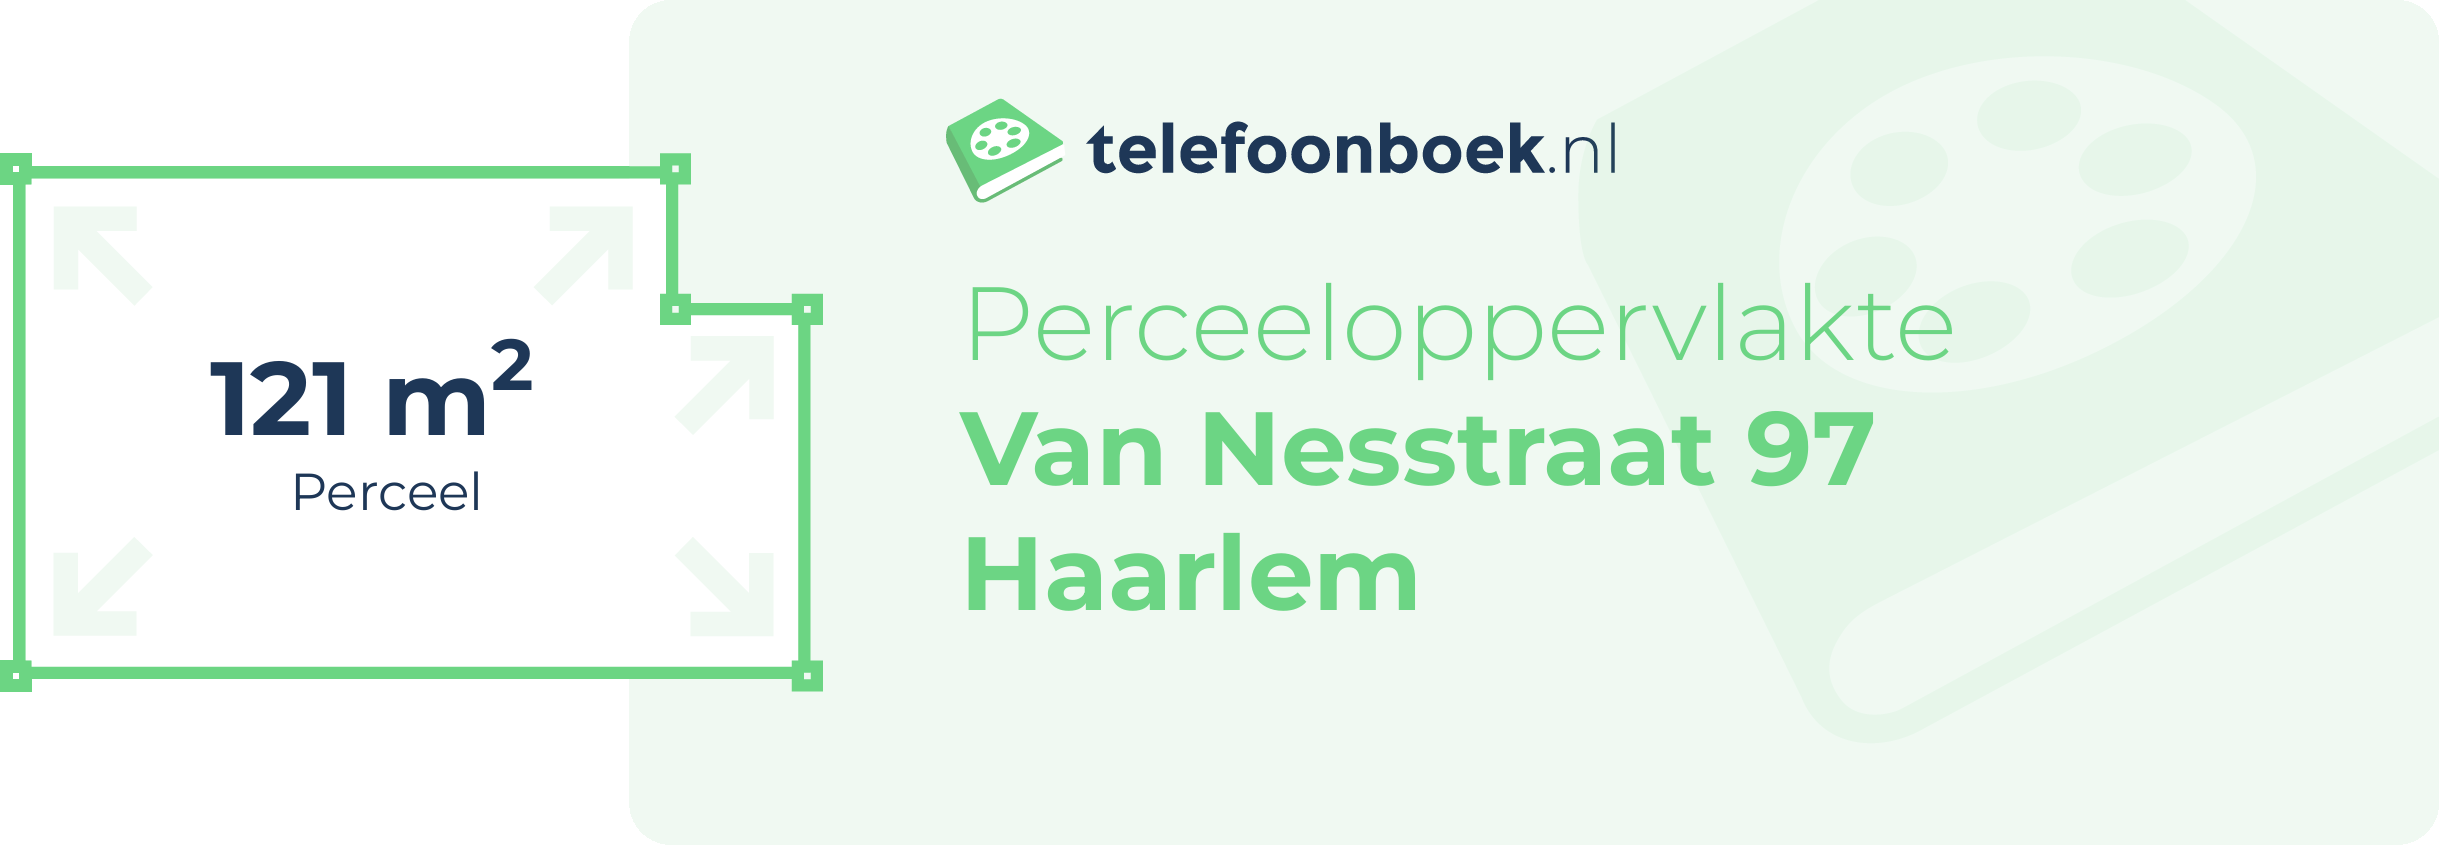 Perceeloppervlakte Van Nesstraat 97 Haarlem